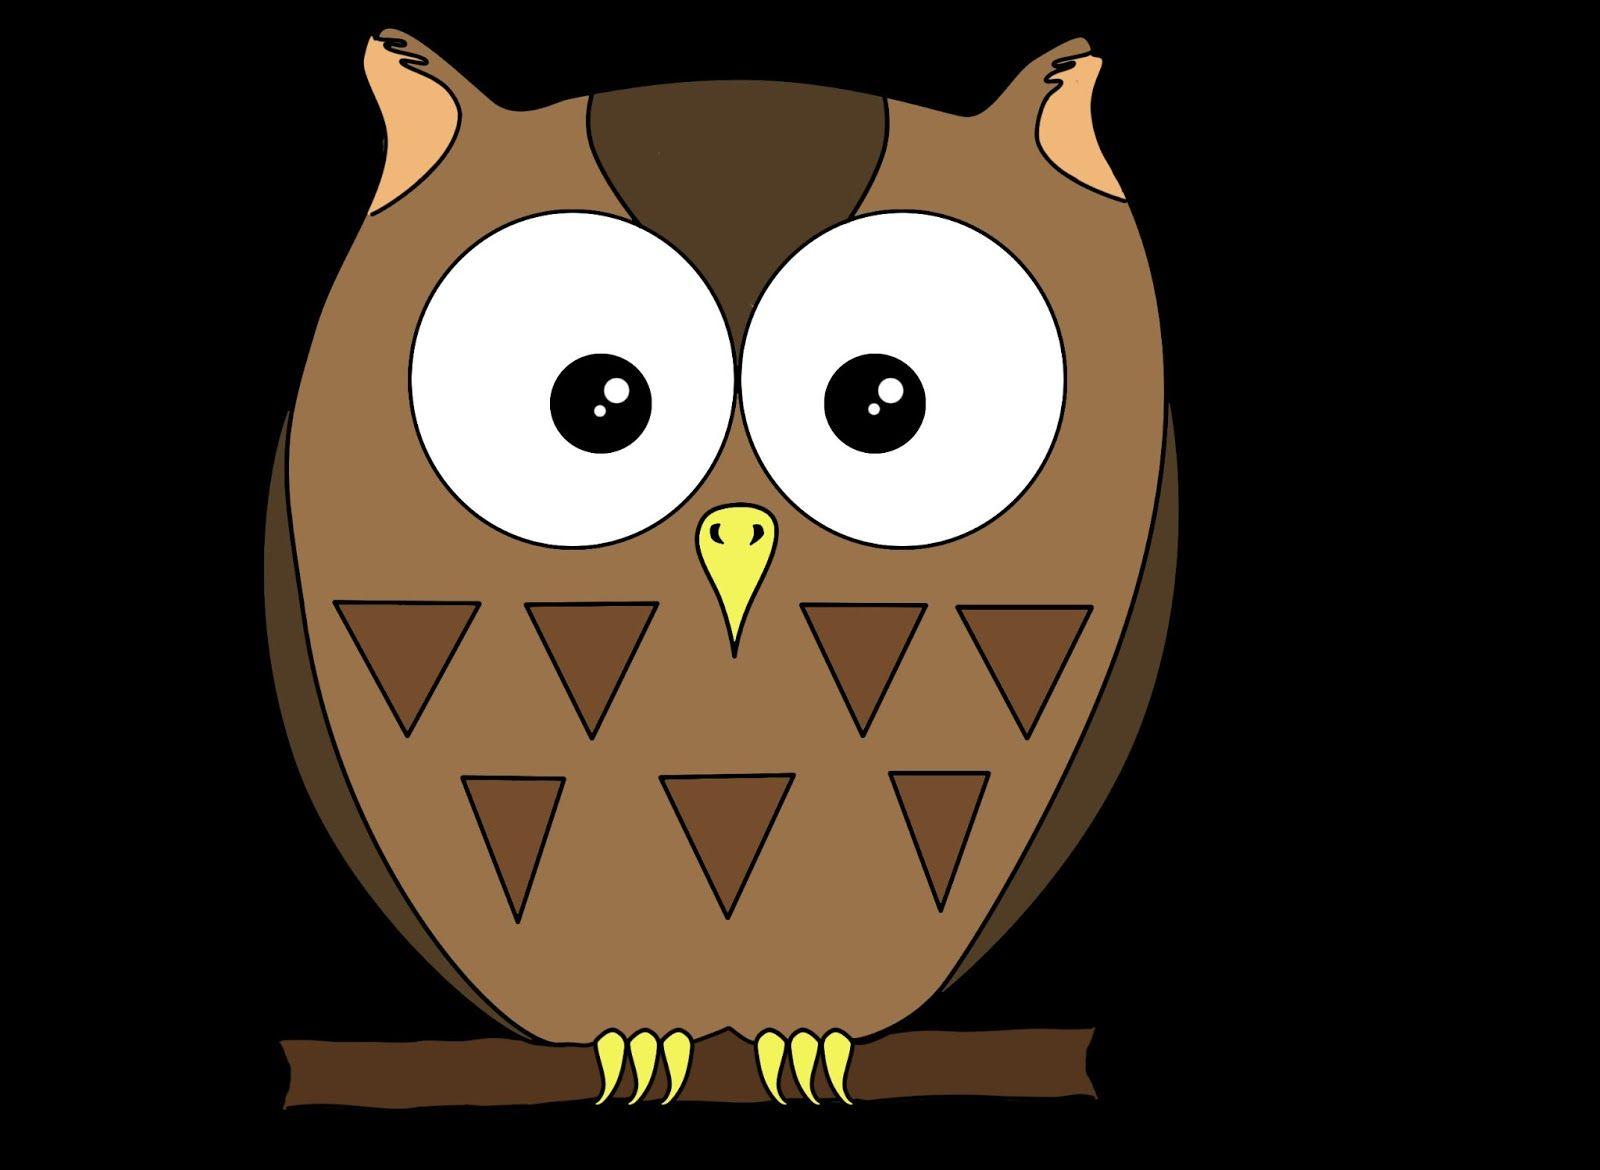 Carla Taylor Illustration: Character Design: Owl